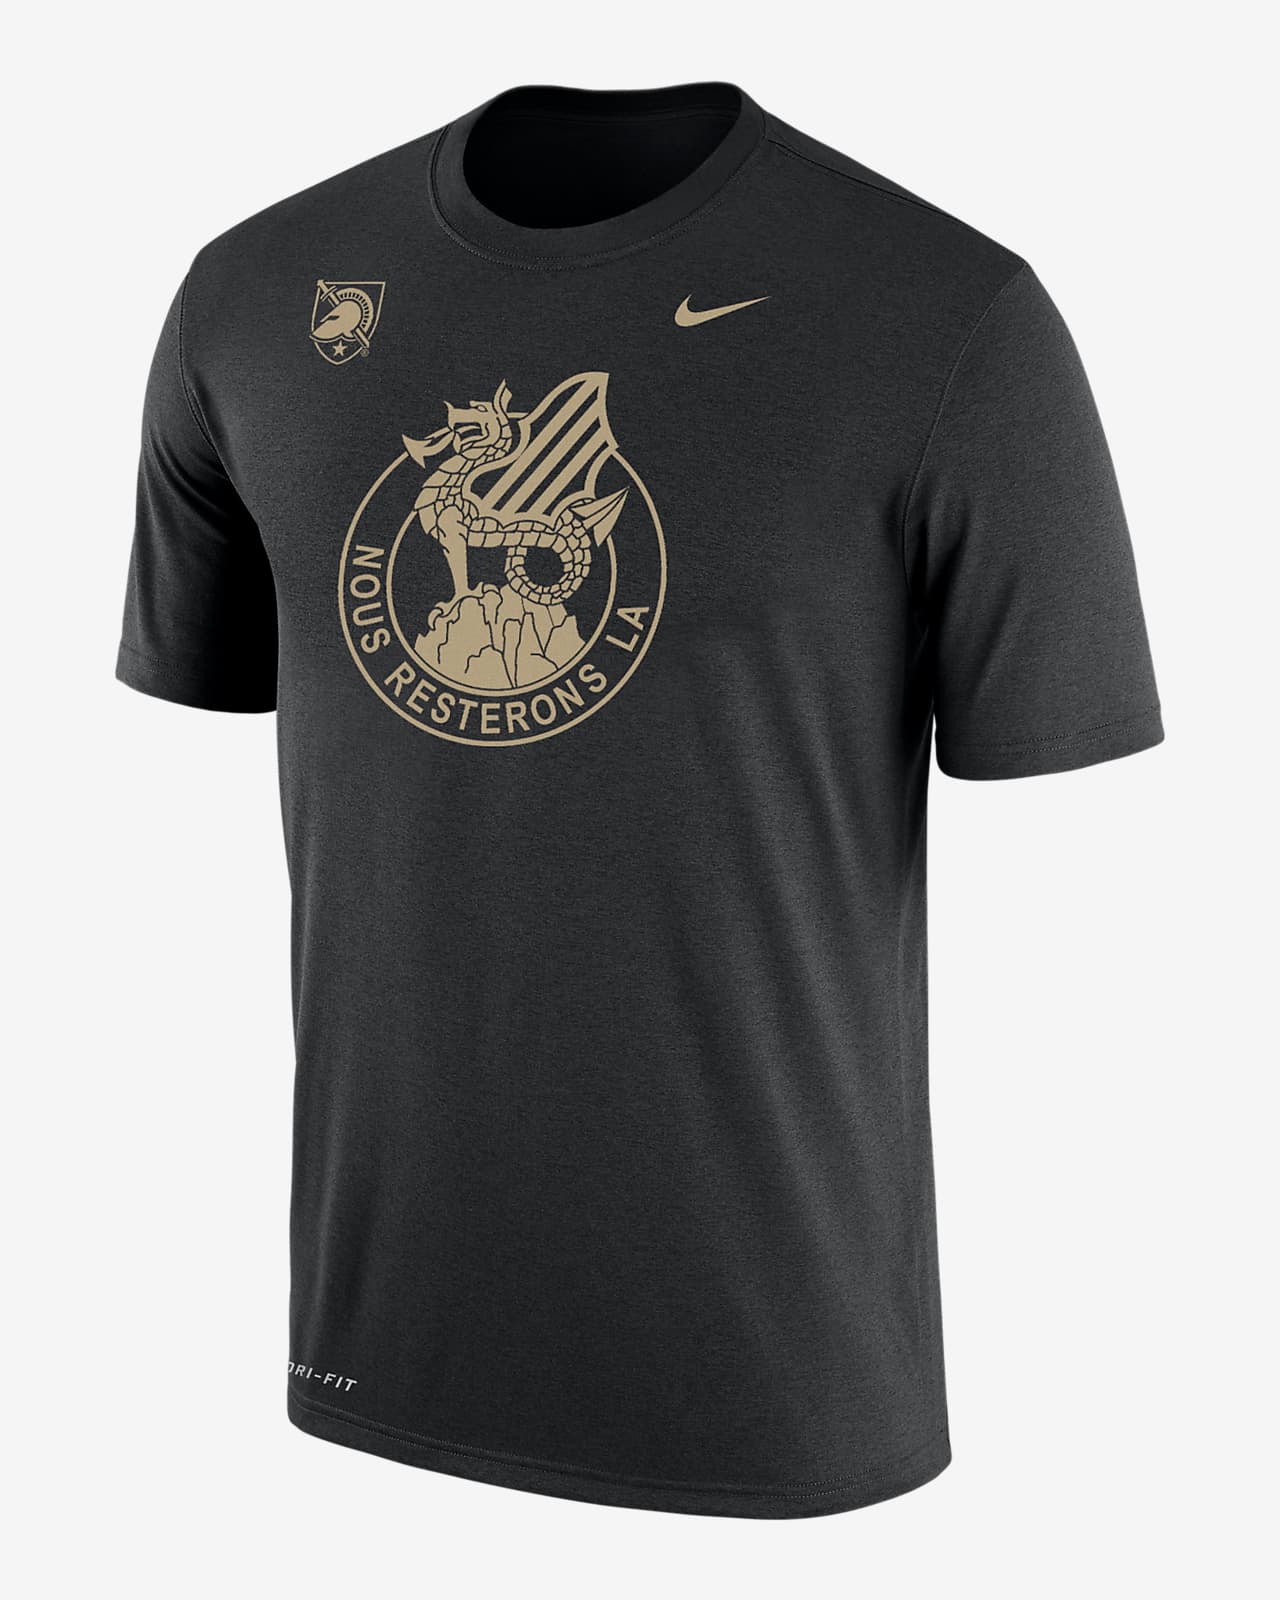 Army Men's Nike Dri-FIT College T-Shirt